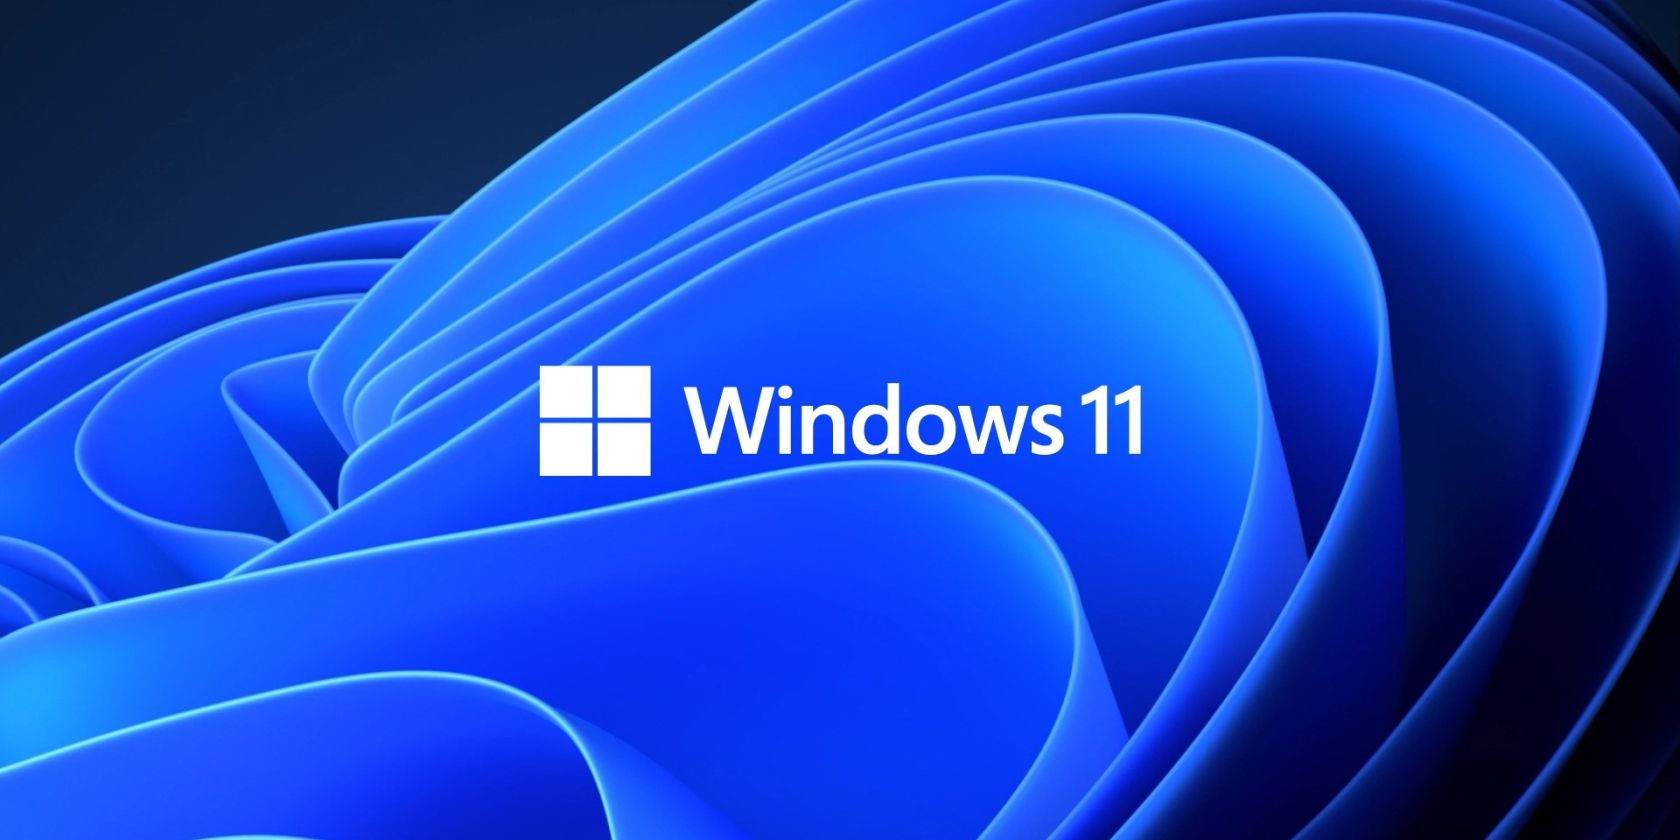 microsoft latest windows 11 release date